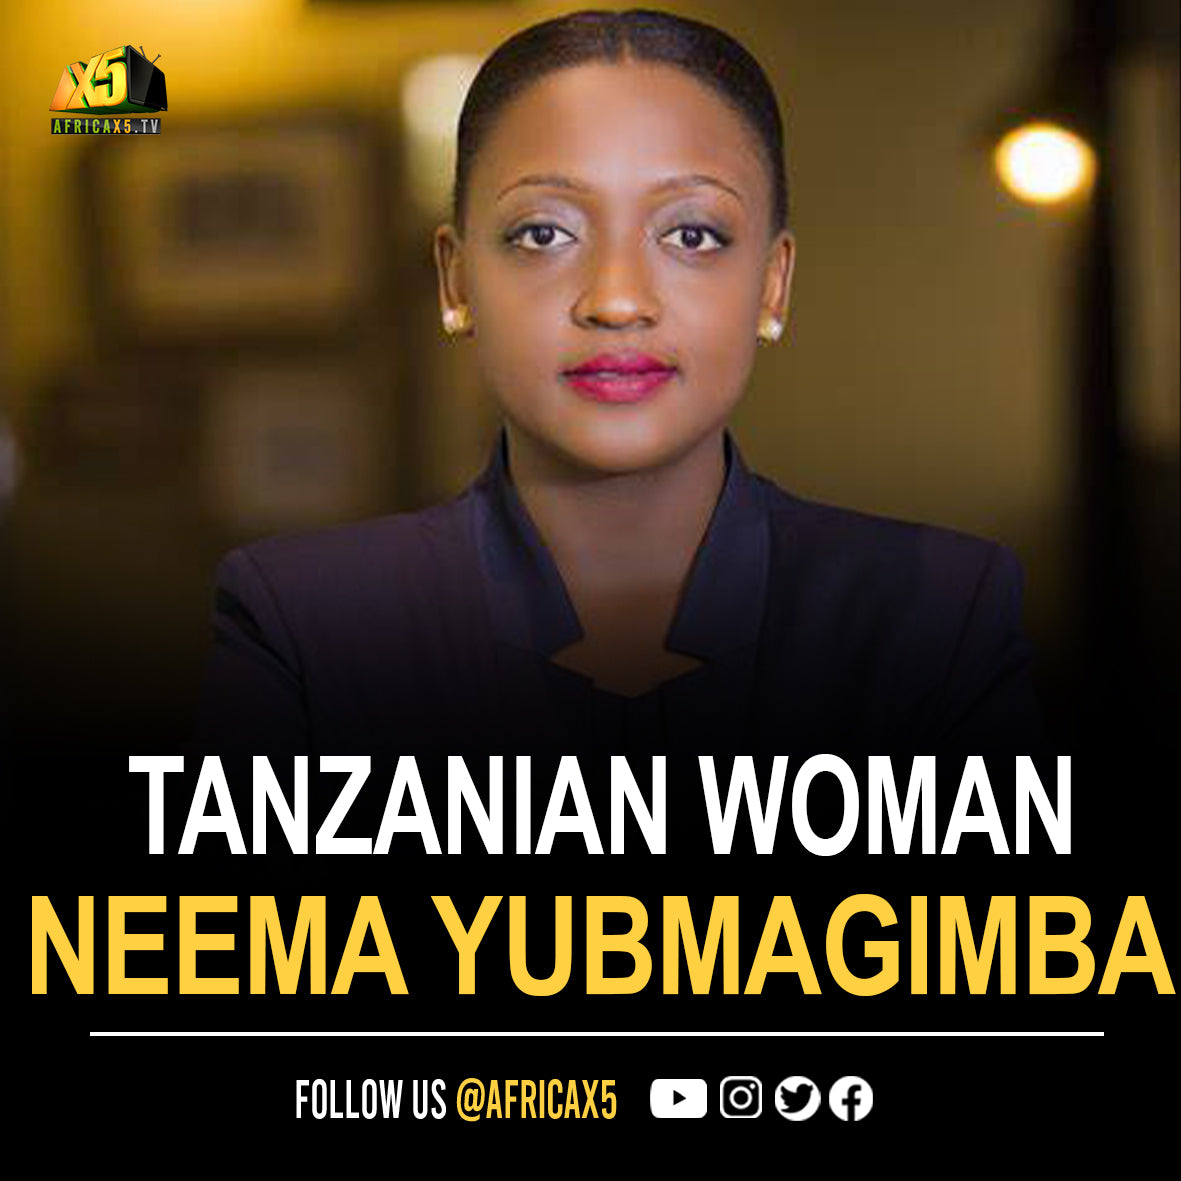 The Tanzanian woman bridging the justice gap with her digital platform